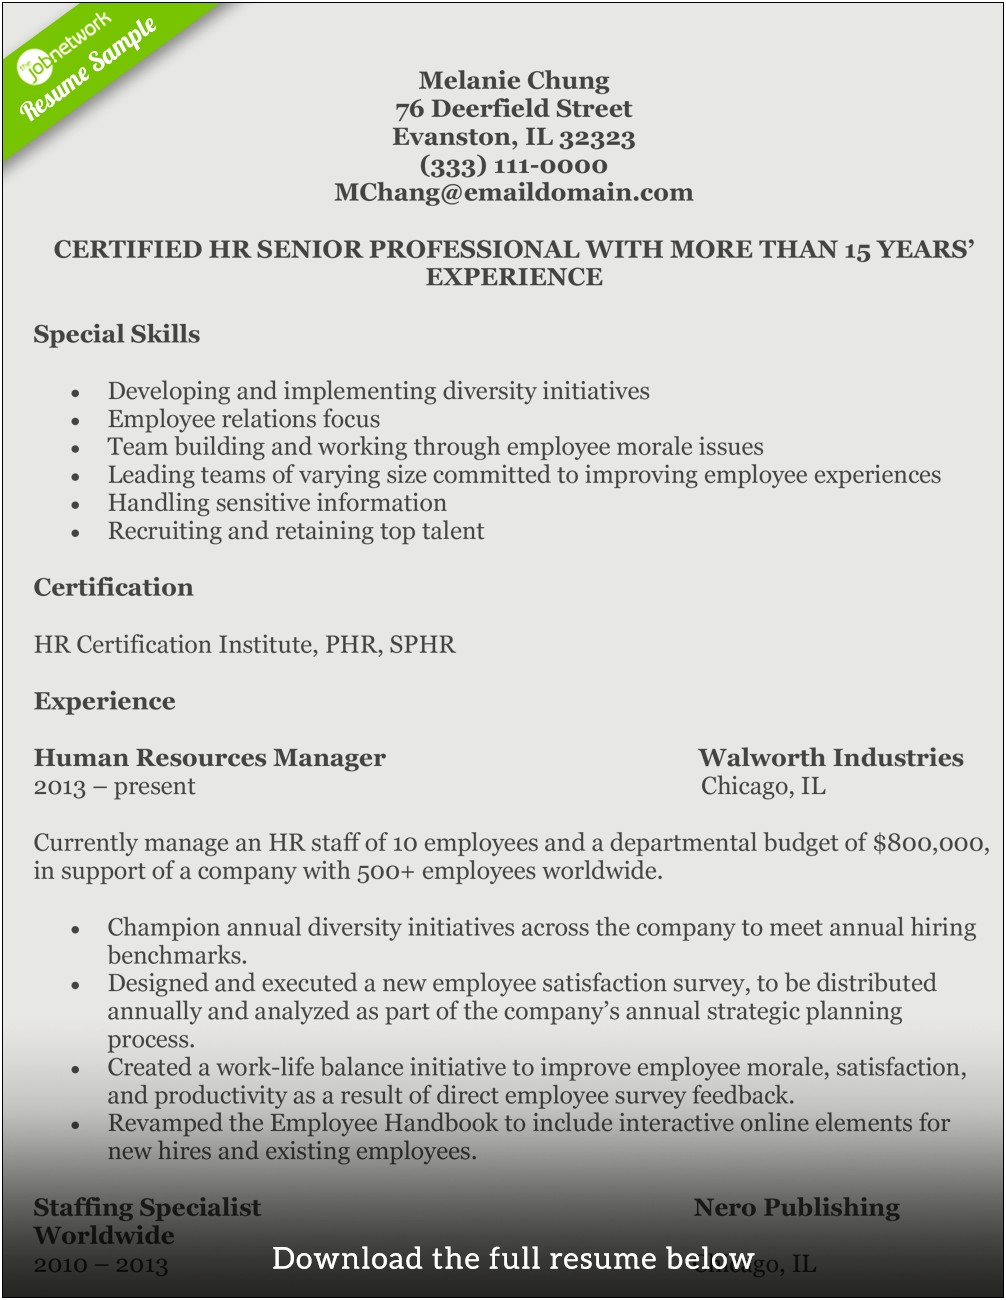 Human Service Worker Resume Sample